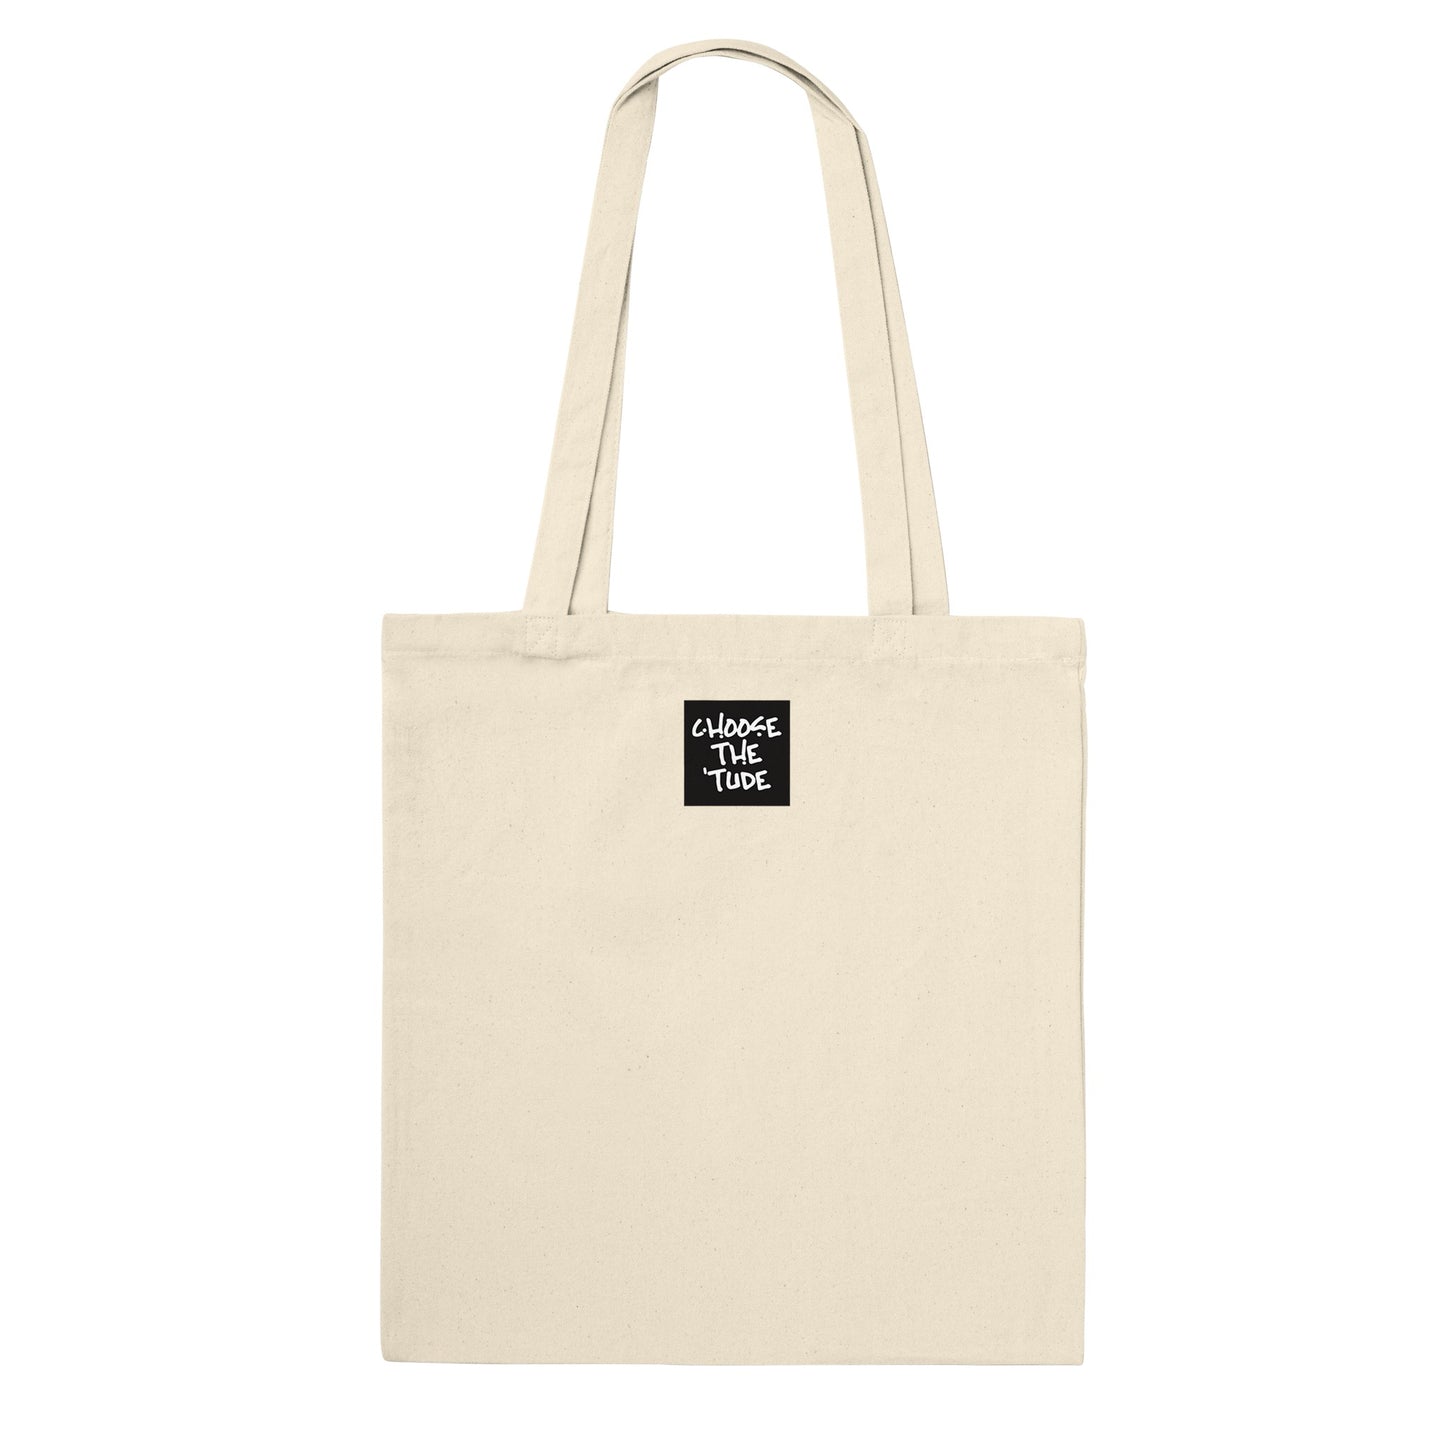 Kindness Creed Premium Tote Bag